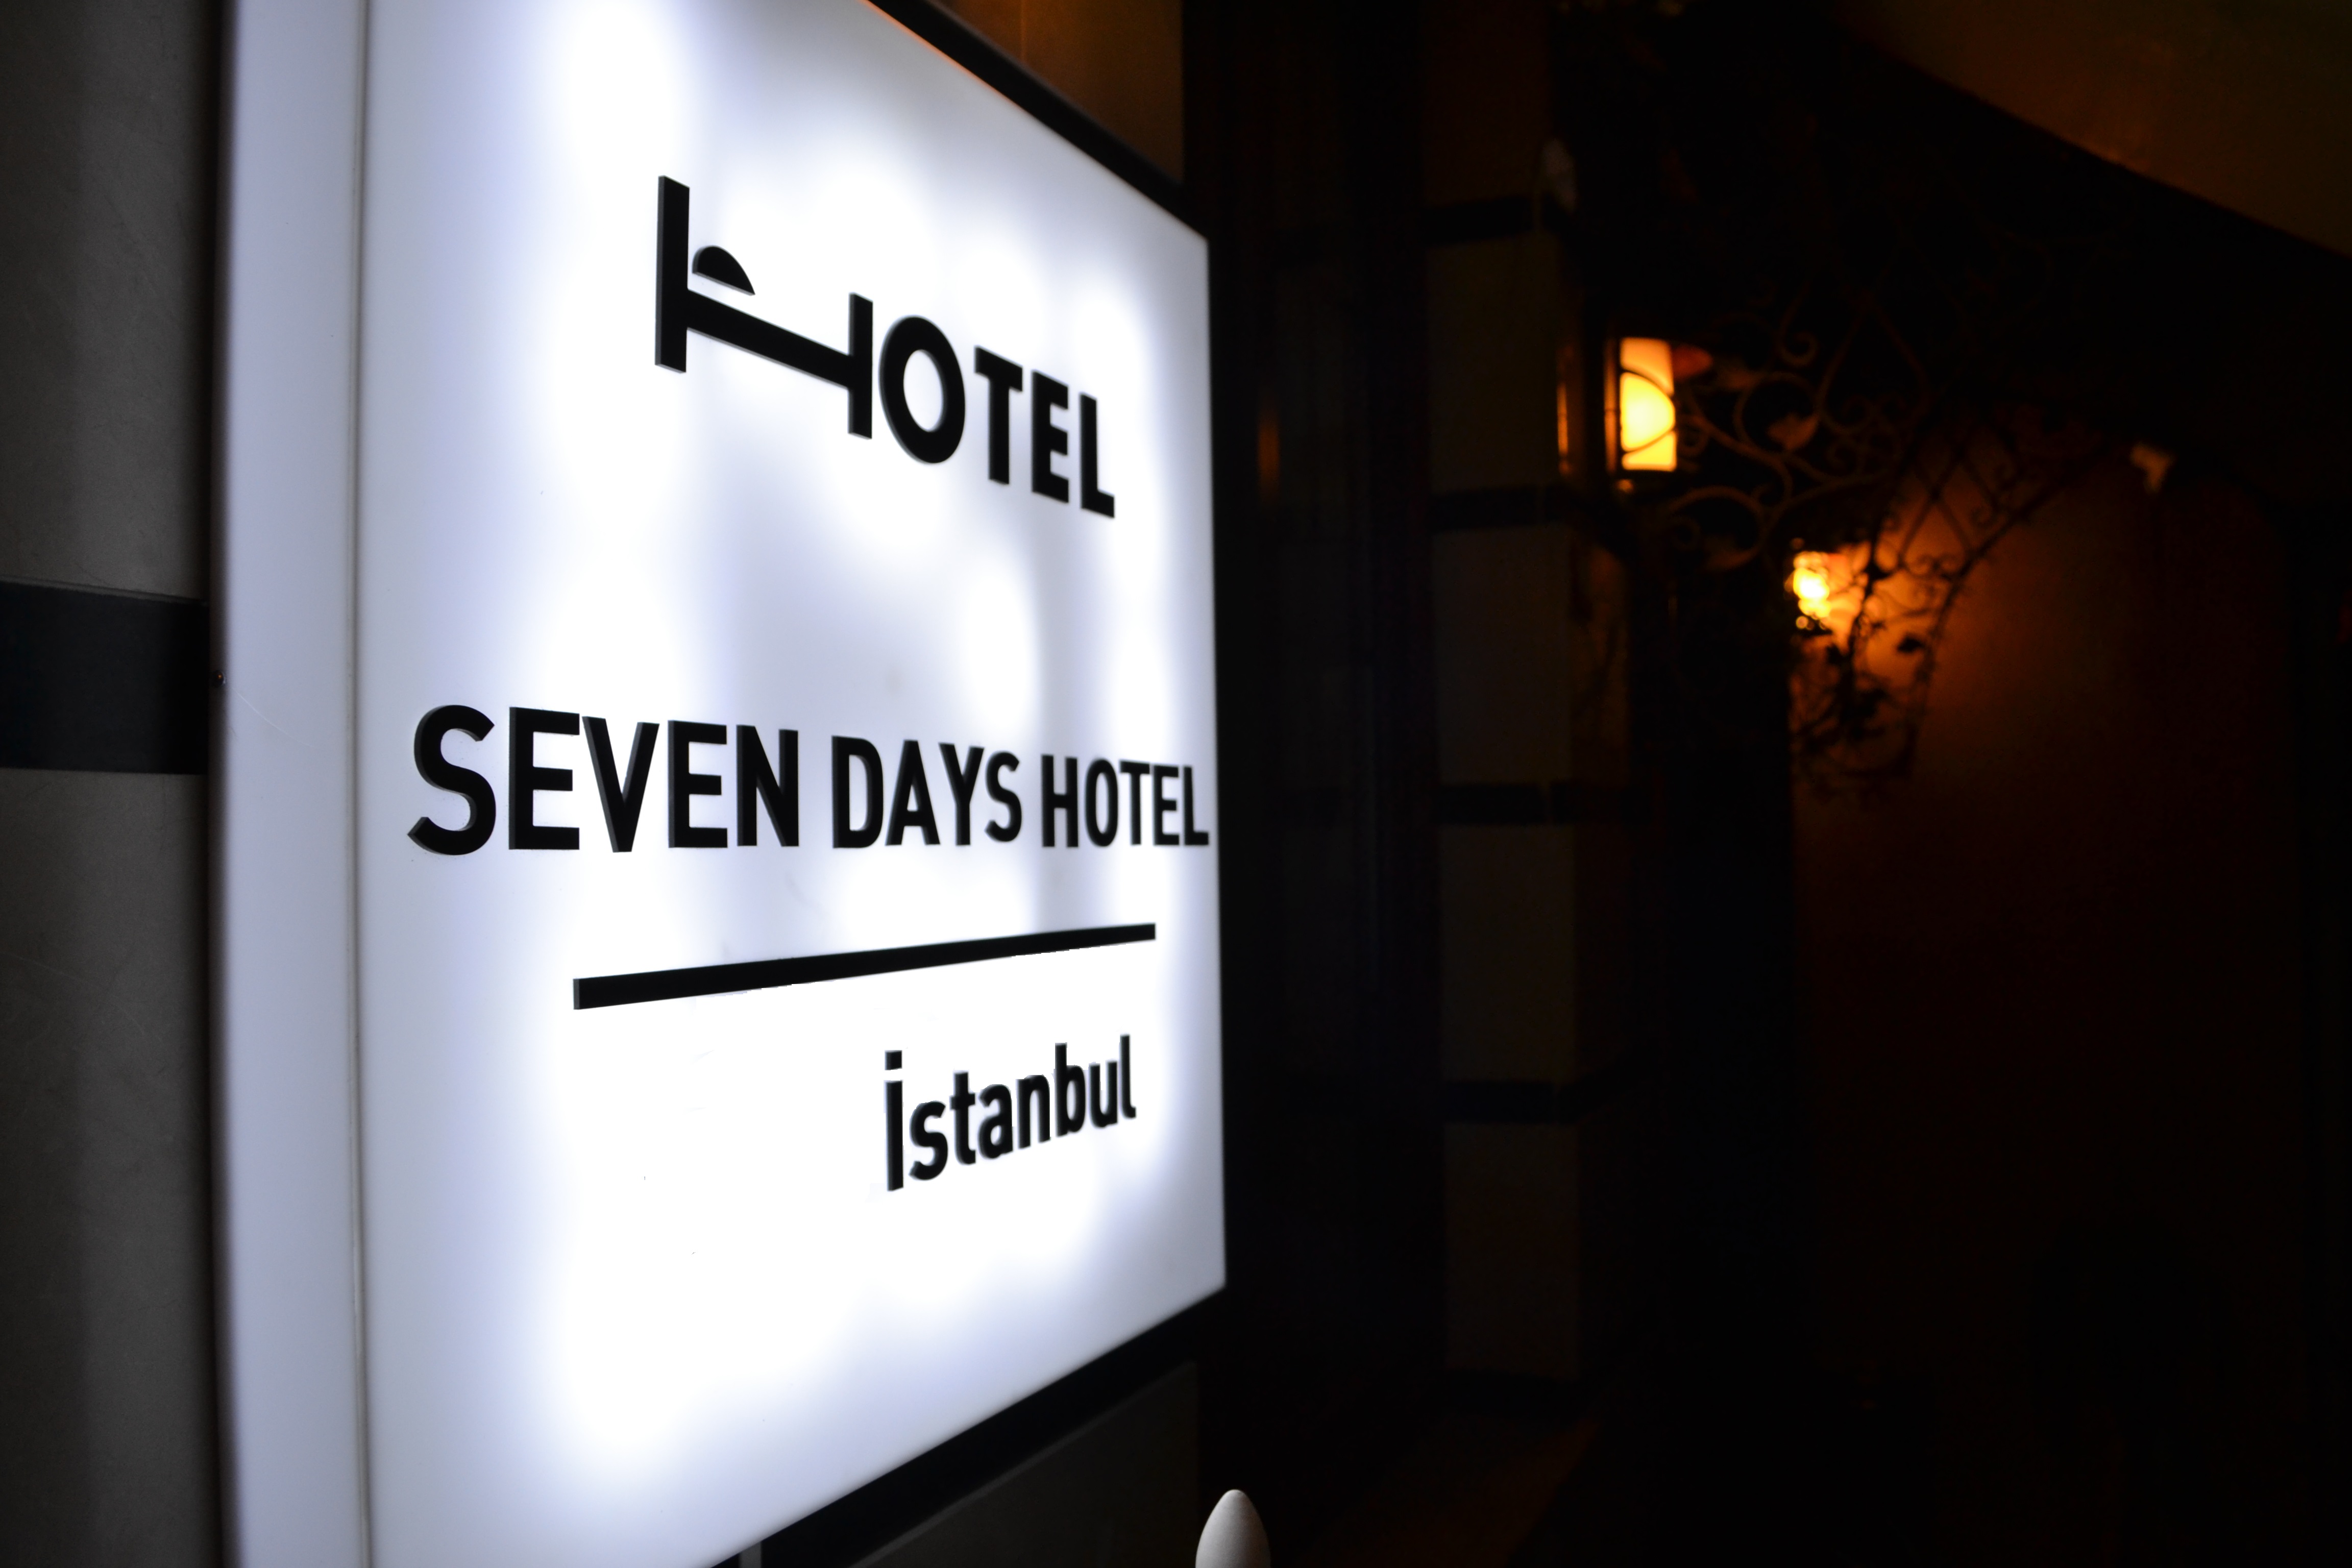 Hotel Seven Days Hotel